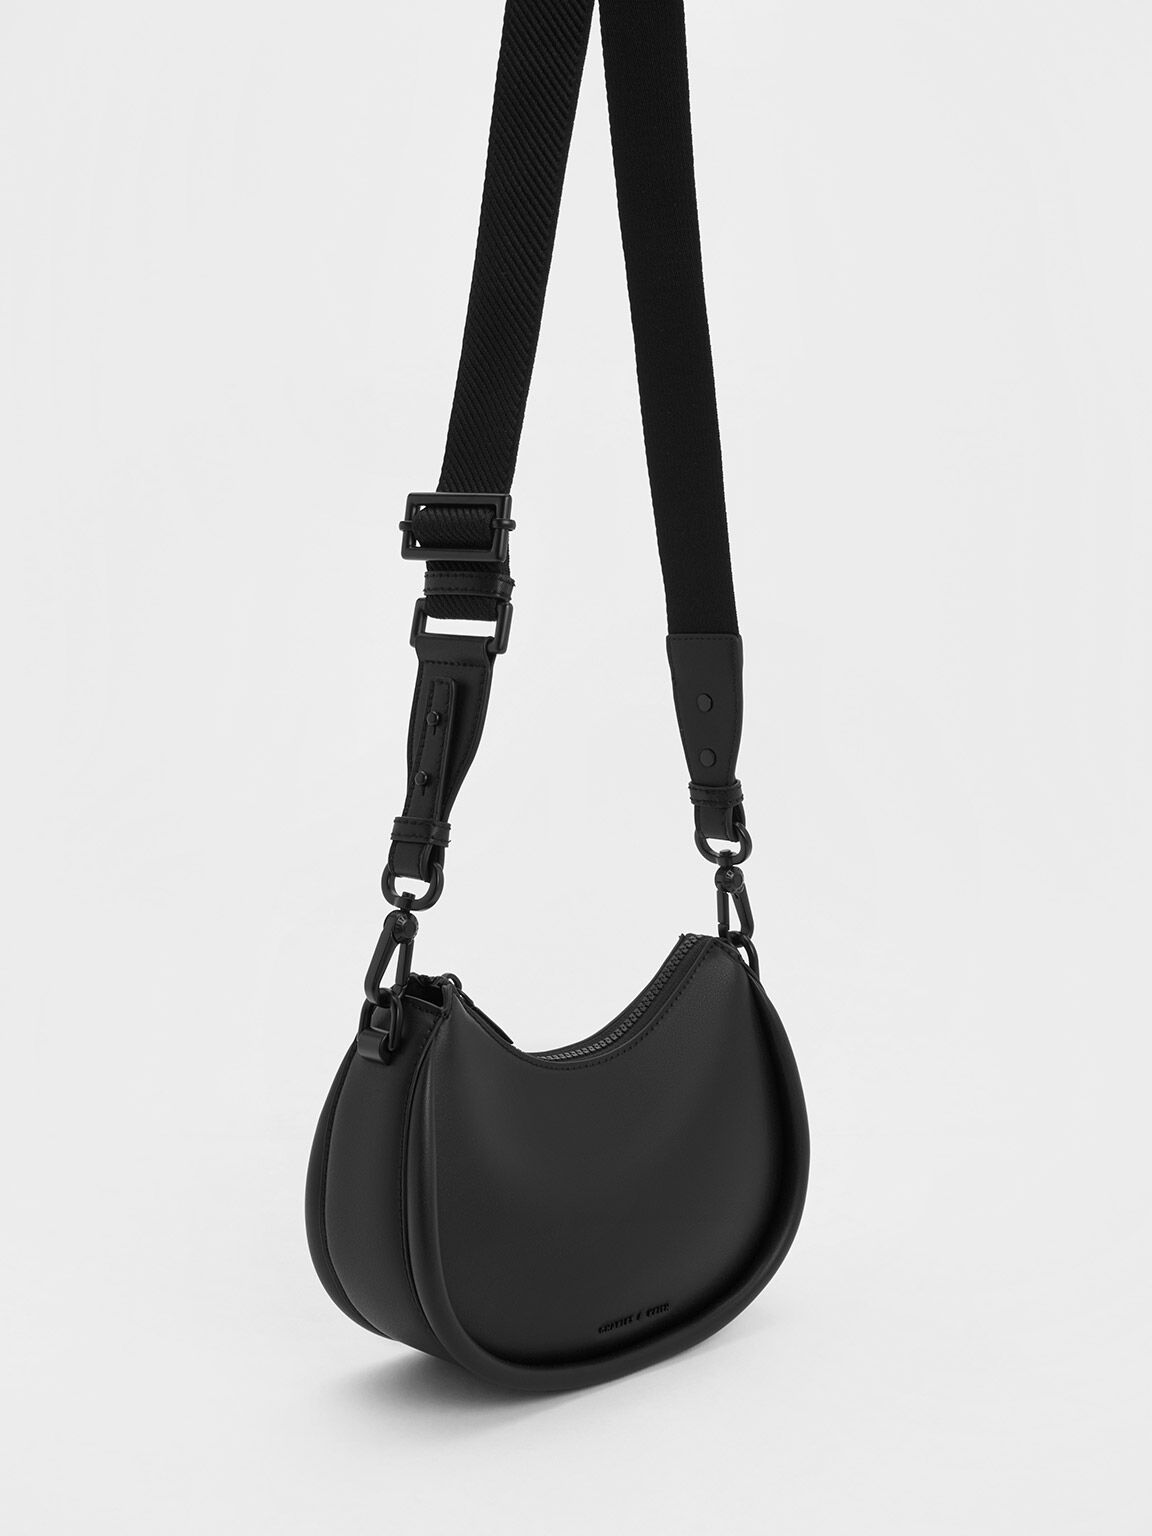 Charles & Keith Women's Lana Curved Shoulder Bag